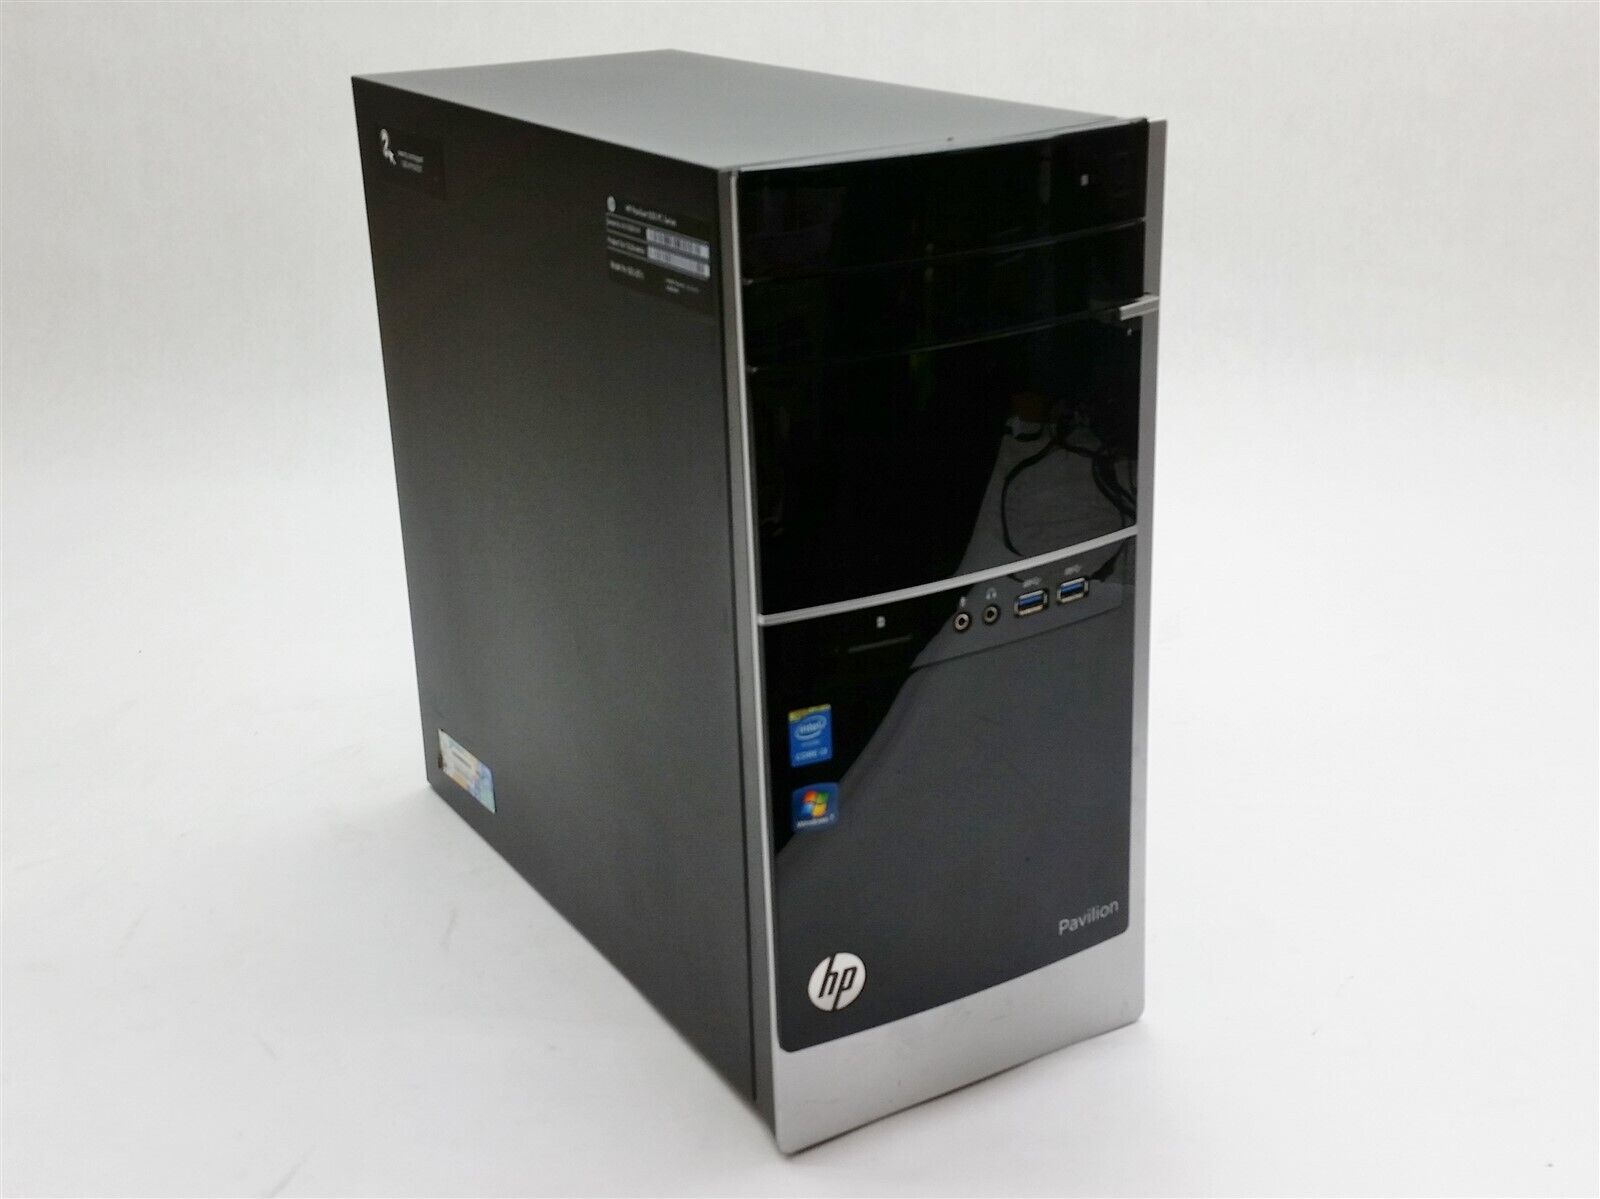 HP Pavilion 500 MT Intel Core i3-4130 3.40GHz 8GB 1TB NO OS HD7470 Computer PC